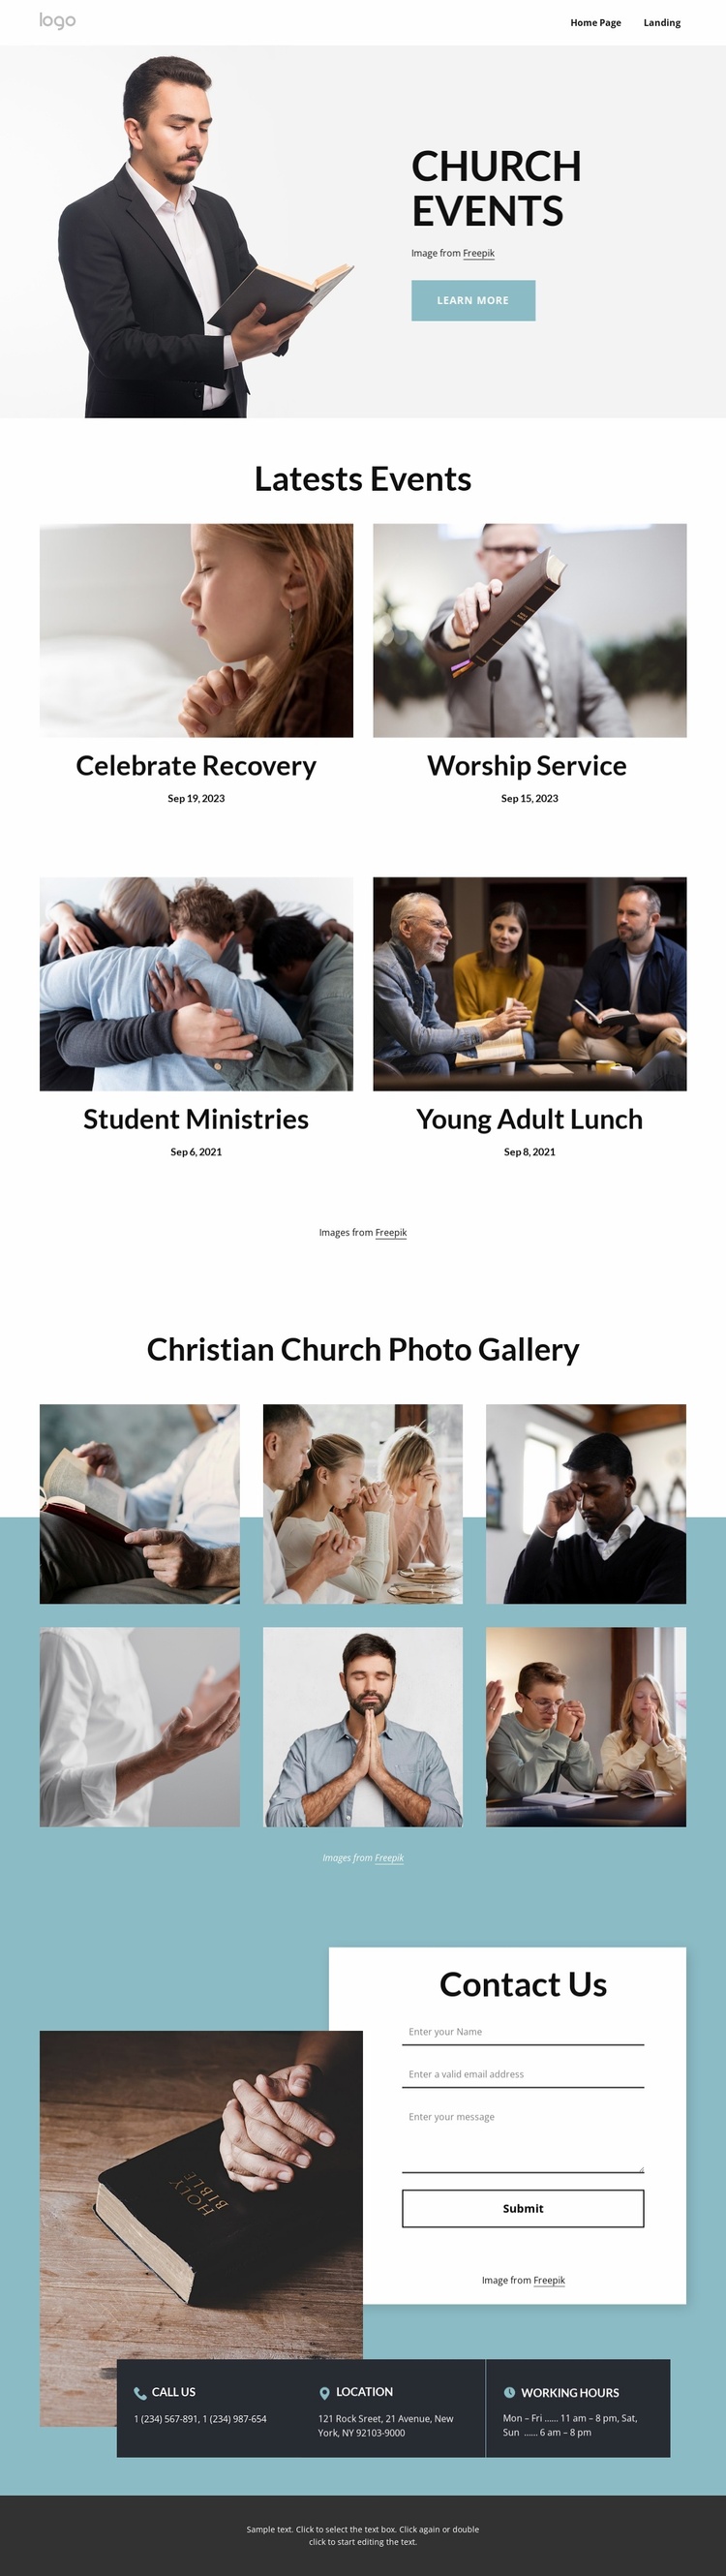 Church events Website Template